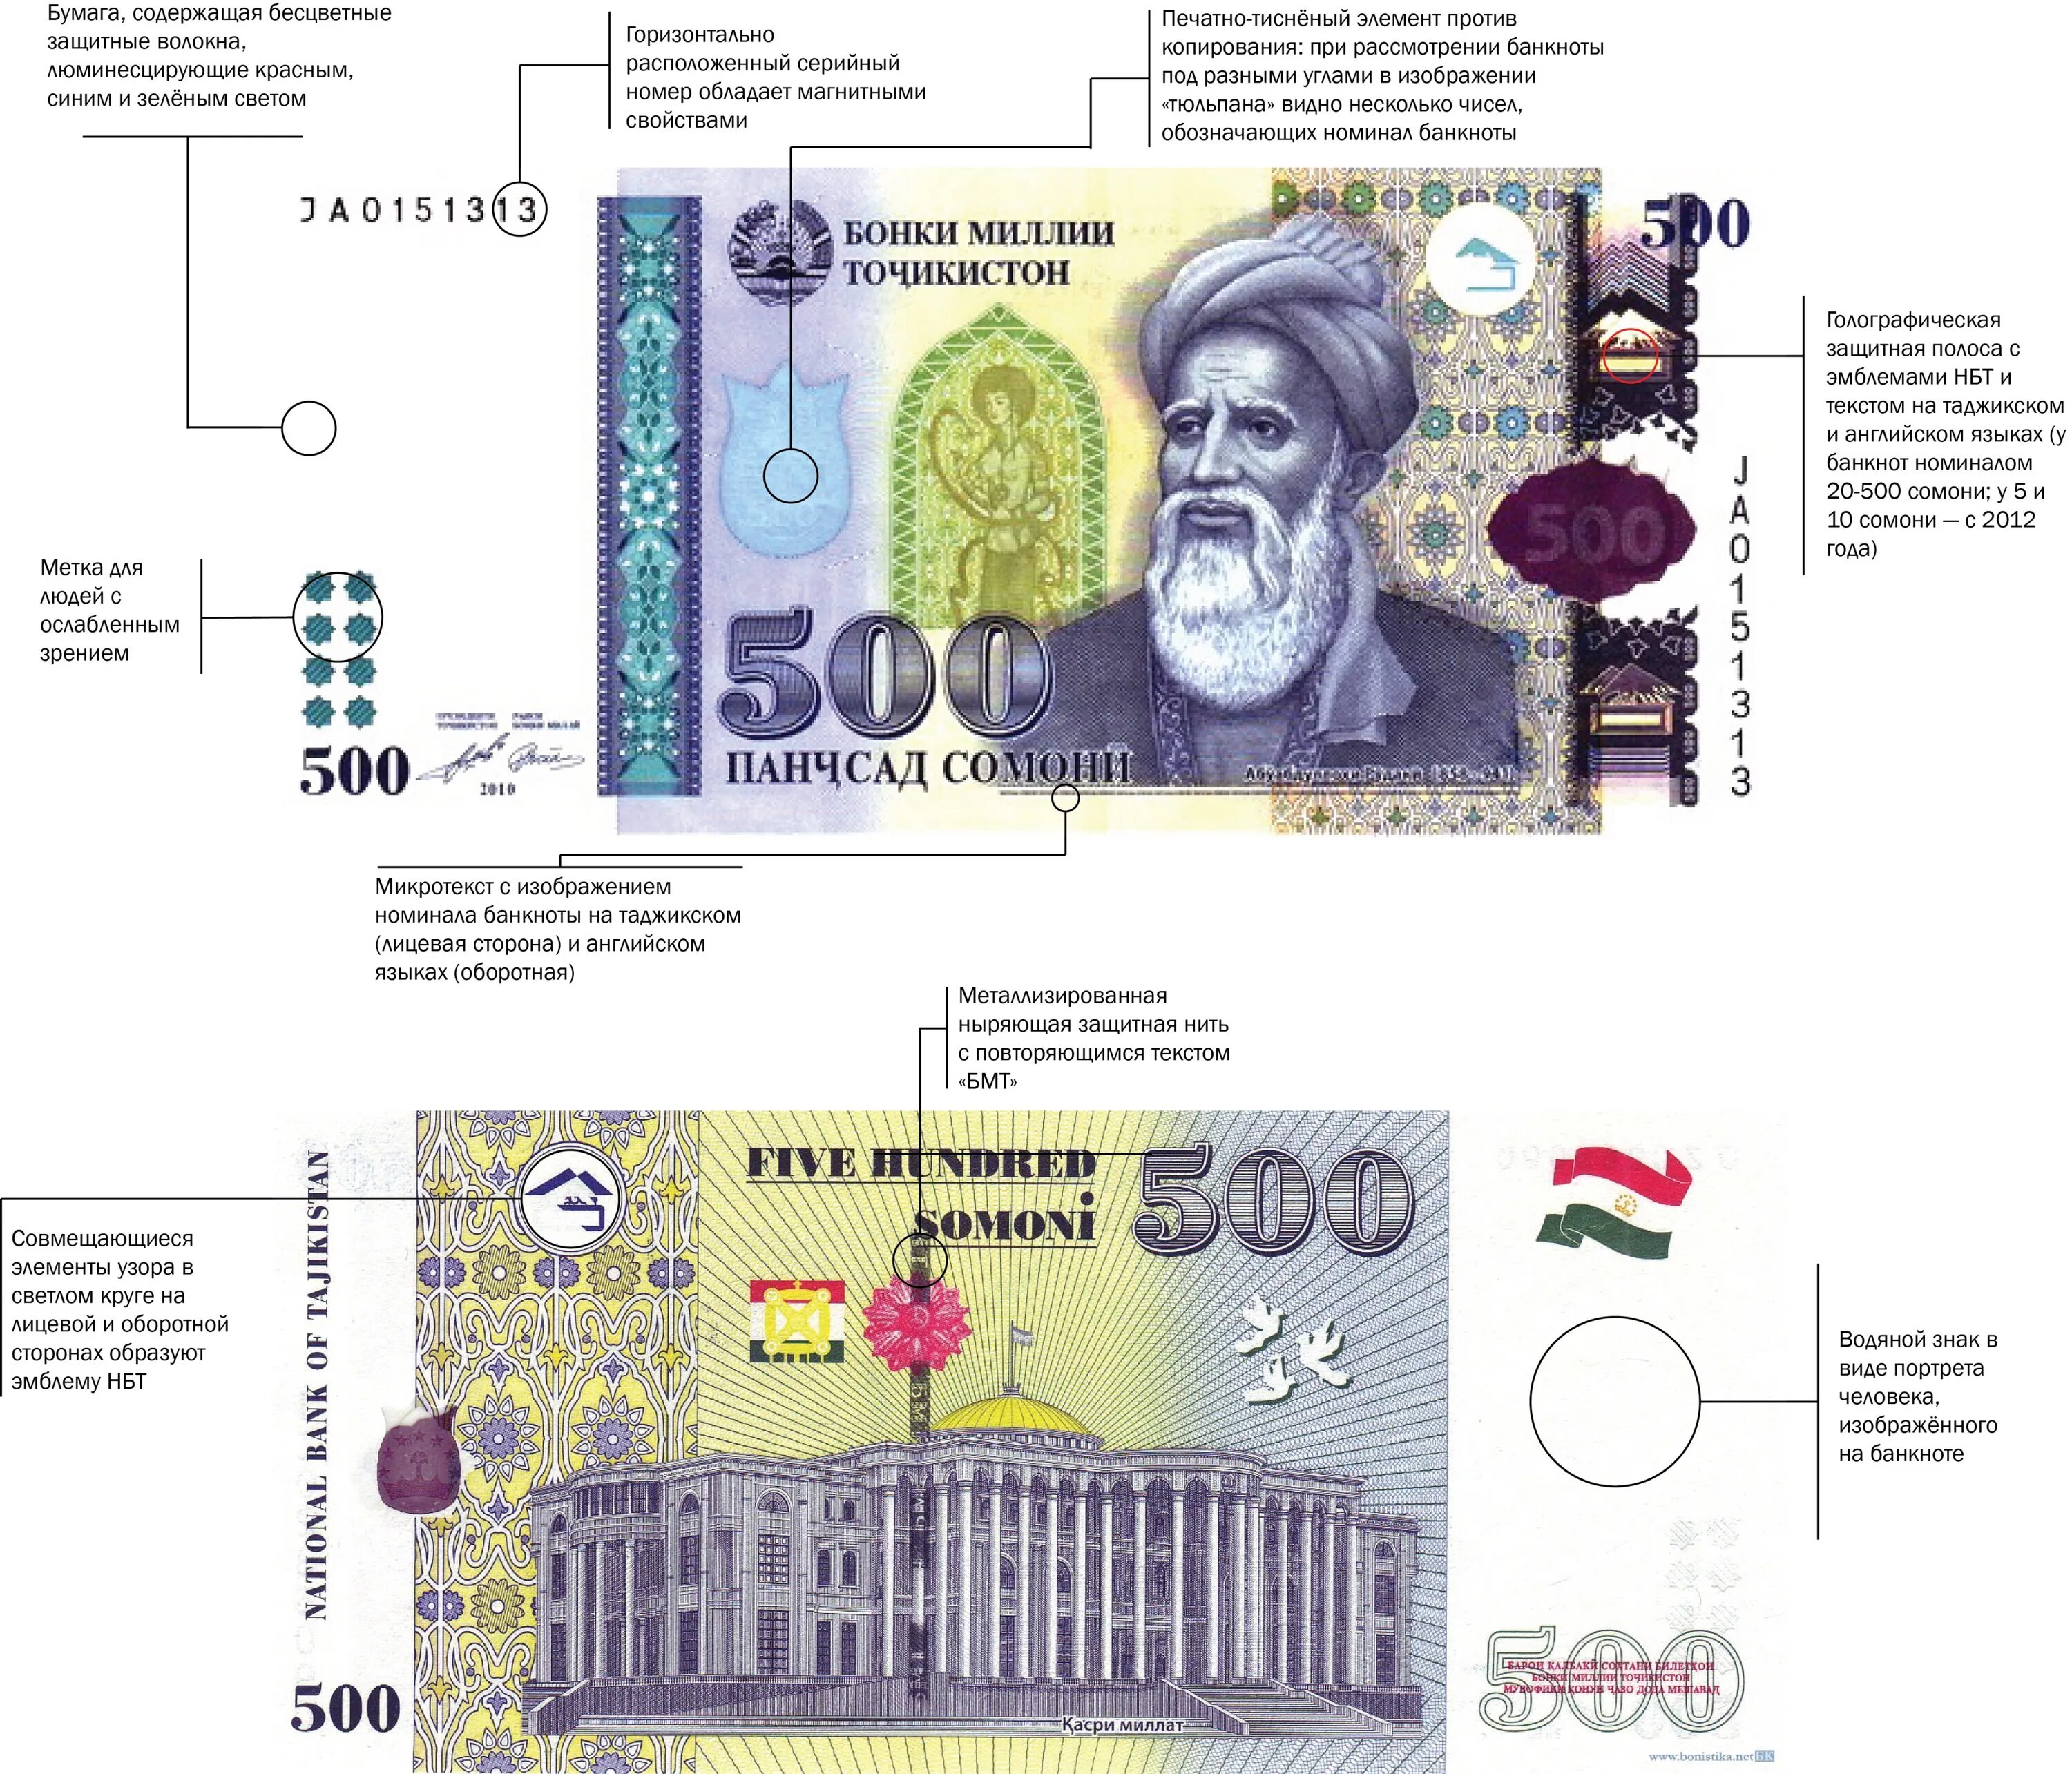 1000 Сомони купюра картина. Валюта Таджикистана 1000 Сомони. Банкноты Сомони Таджикистана. Купюра Таджикистанский Сомони.